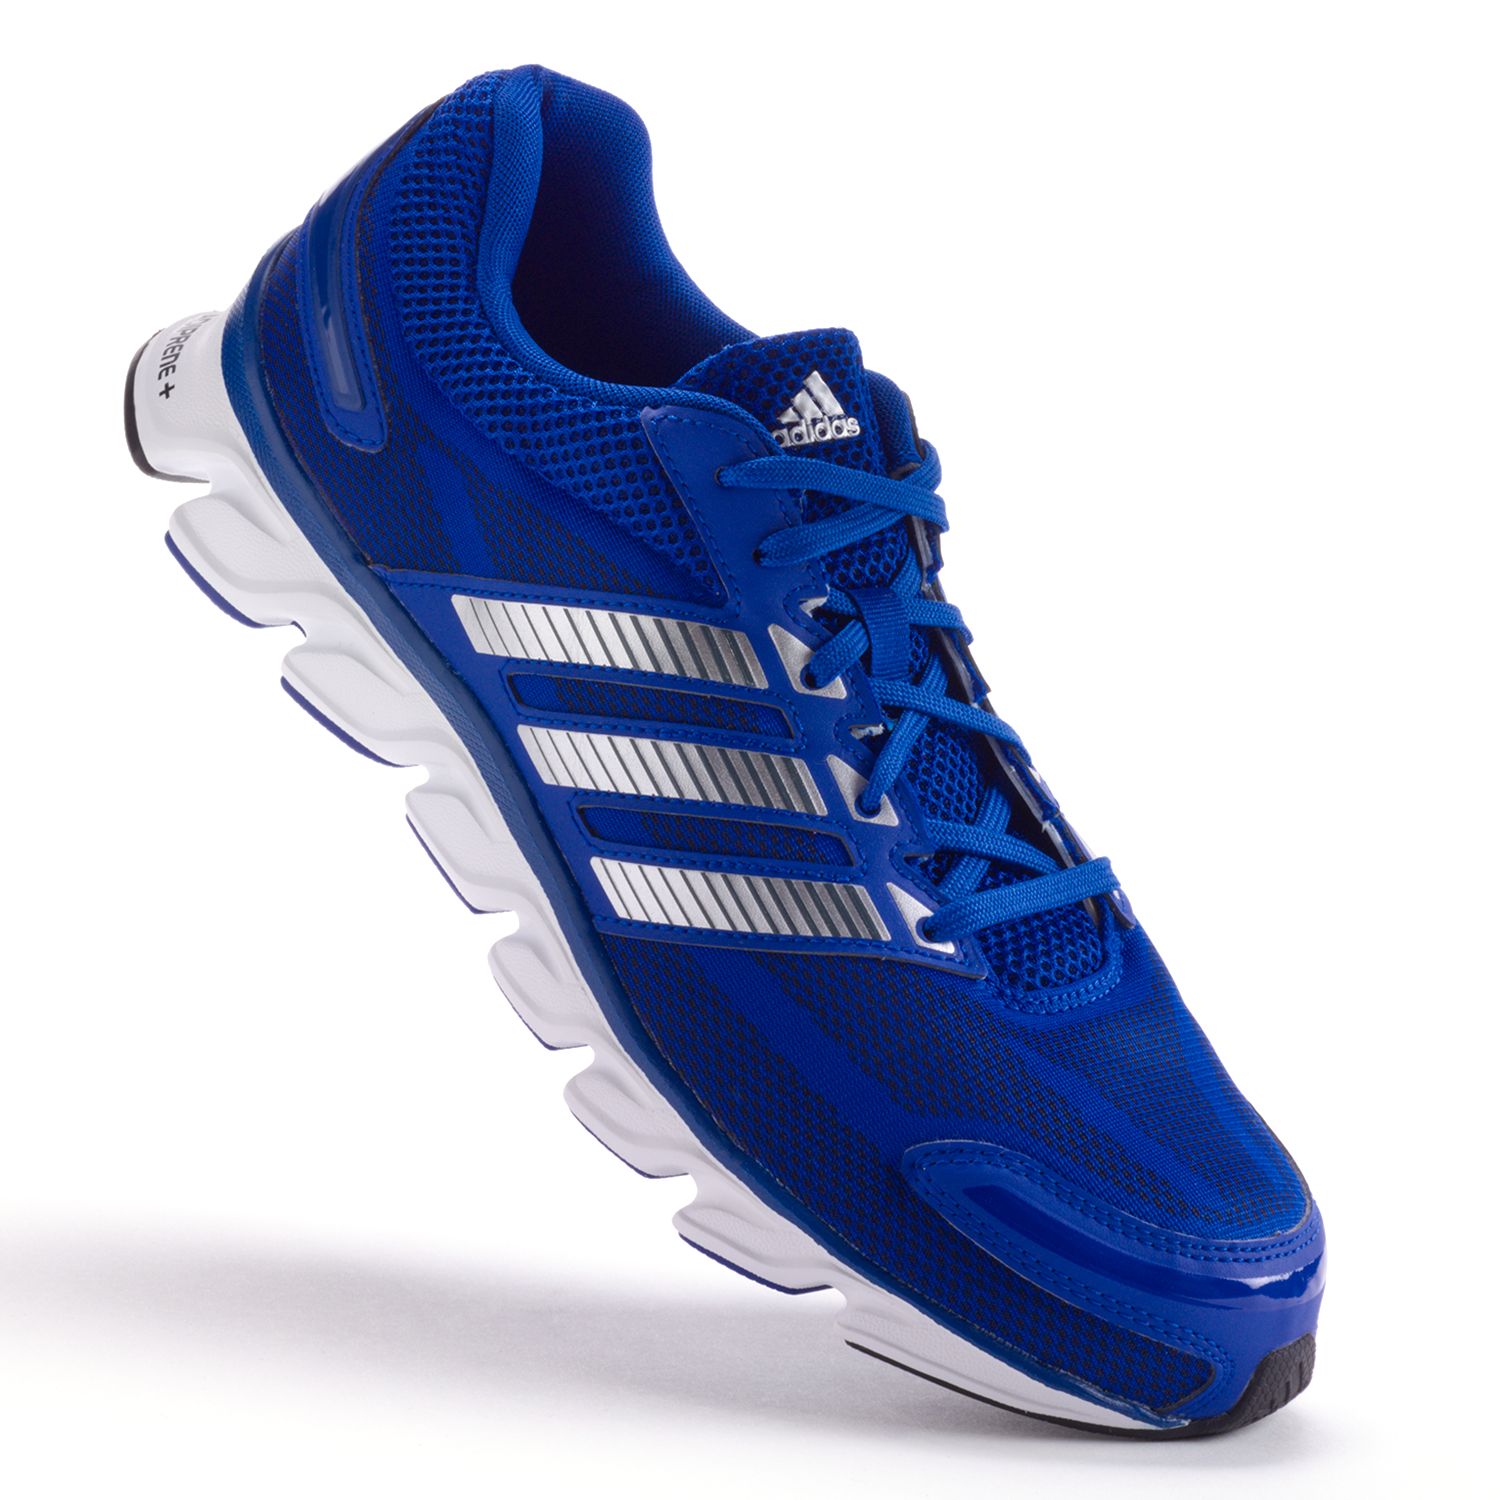 adidas Powerblaze Men's Running Shoes